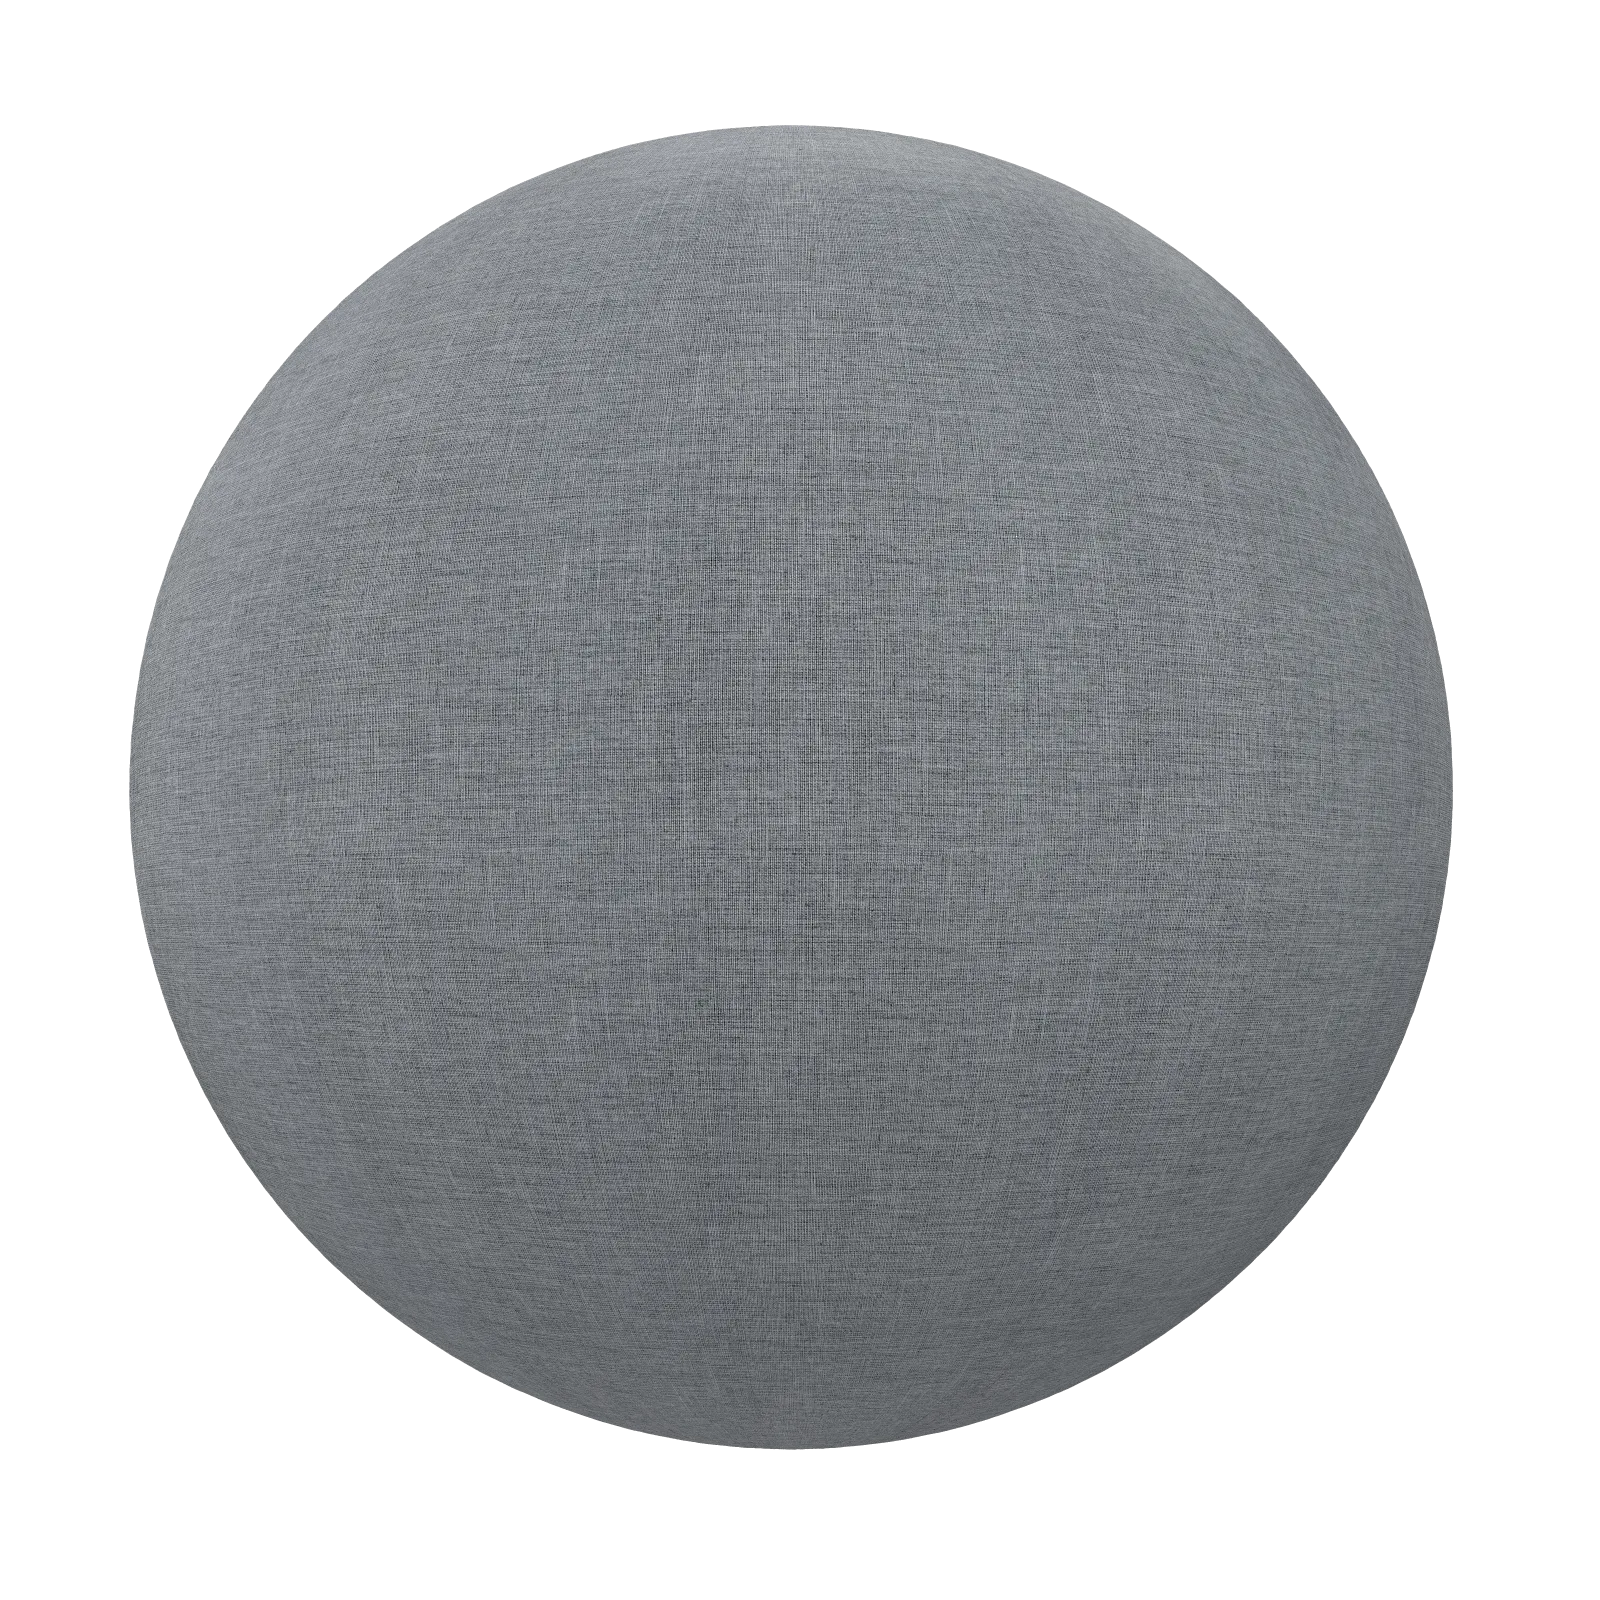 PBR CGAXIS TEXTURES – FABRICS – Grey Fabric 02